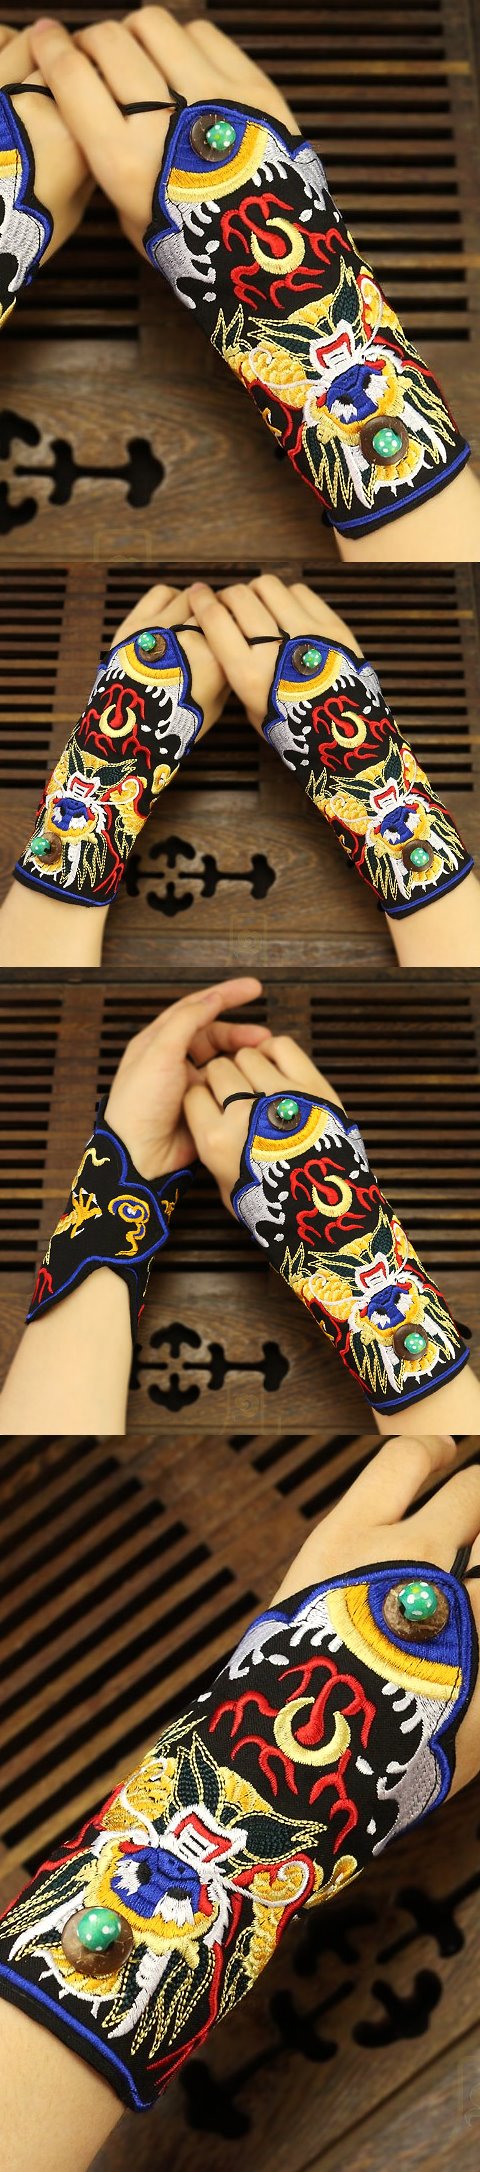 Versatile Ethnic Embroidery Mitt Gloves - Black/Gold